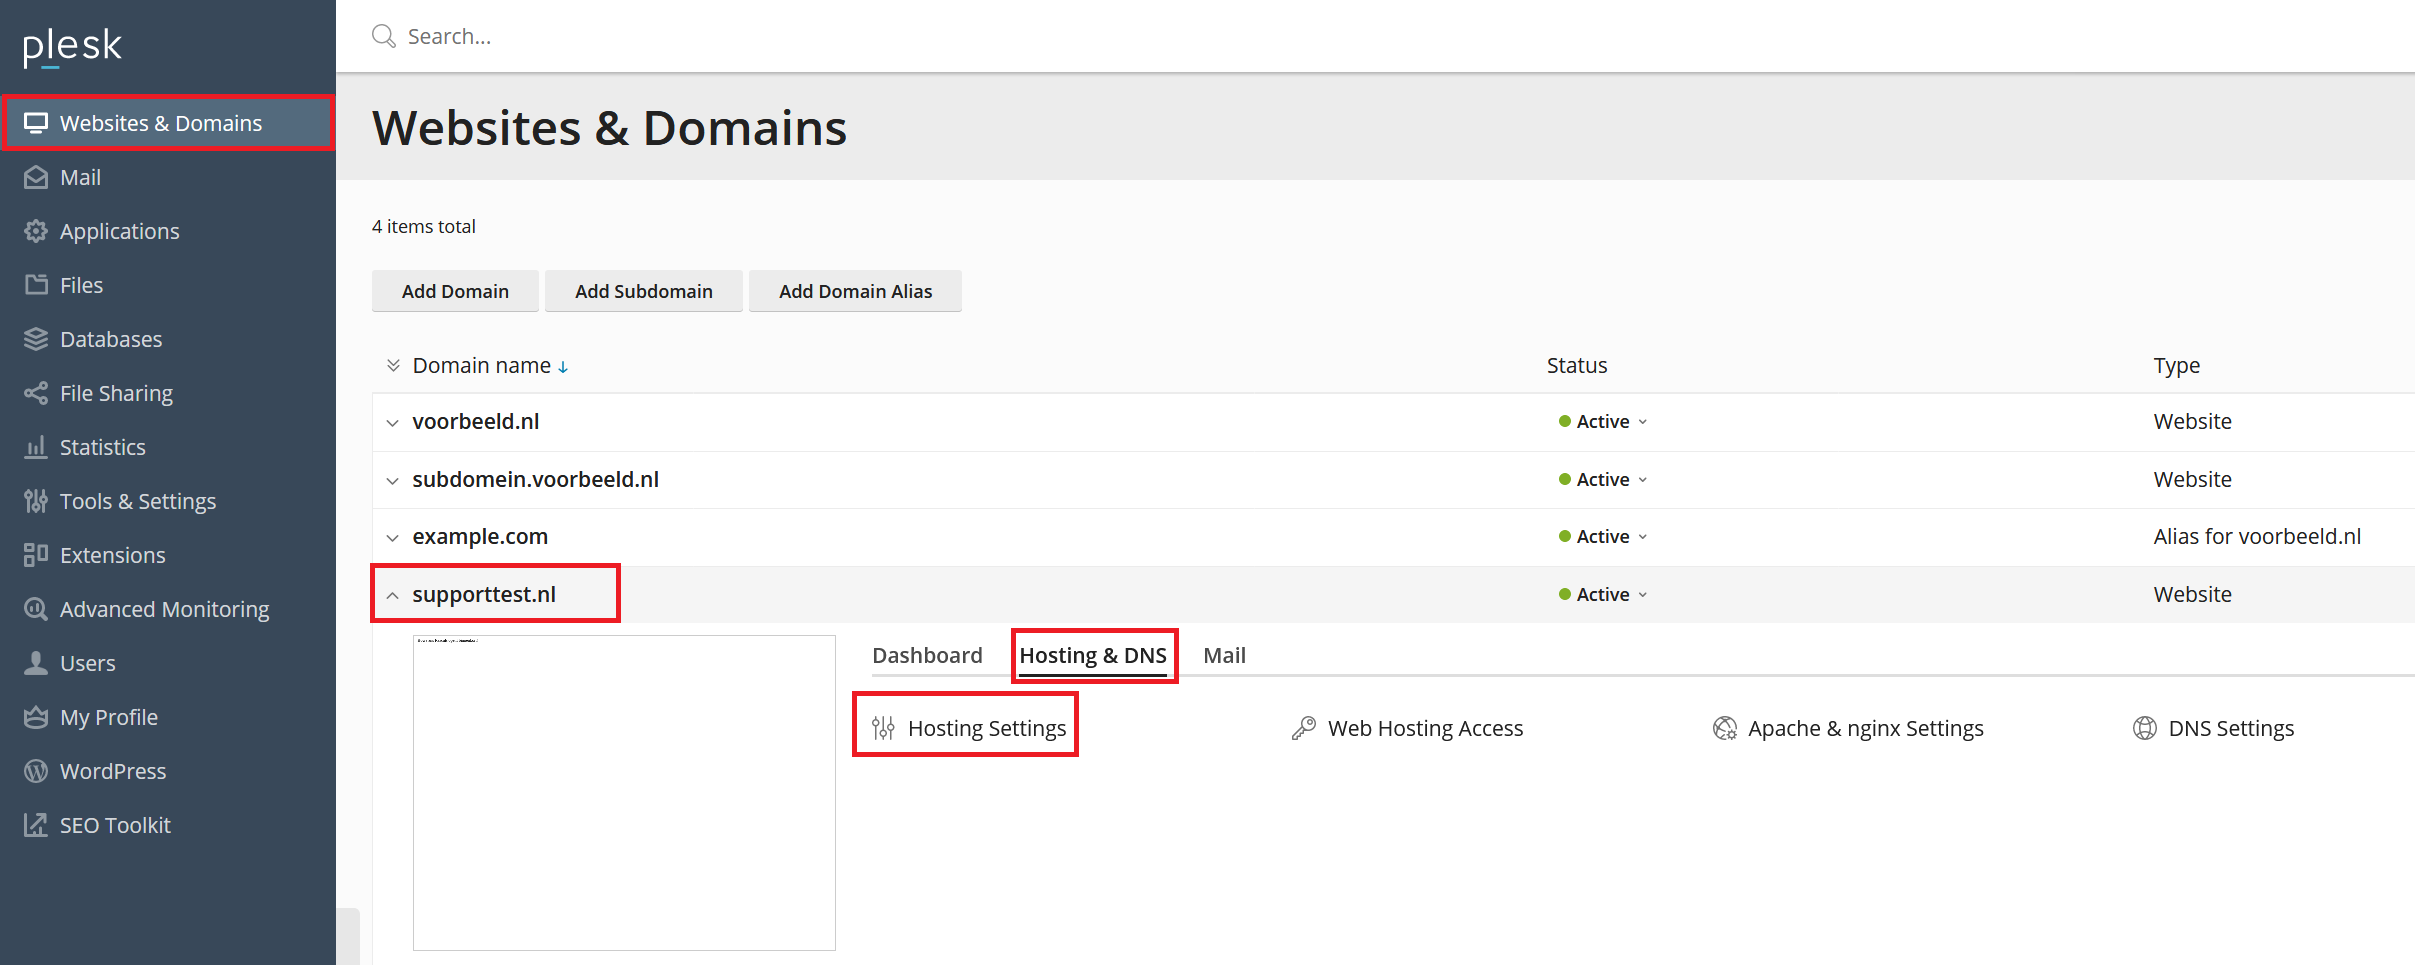 plesk websites and domains hosting & dns hosting settings